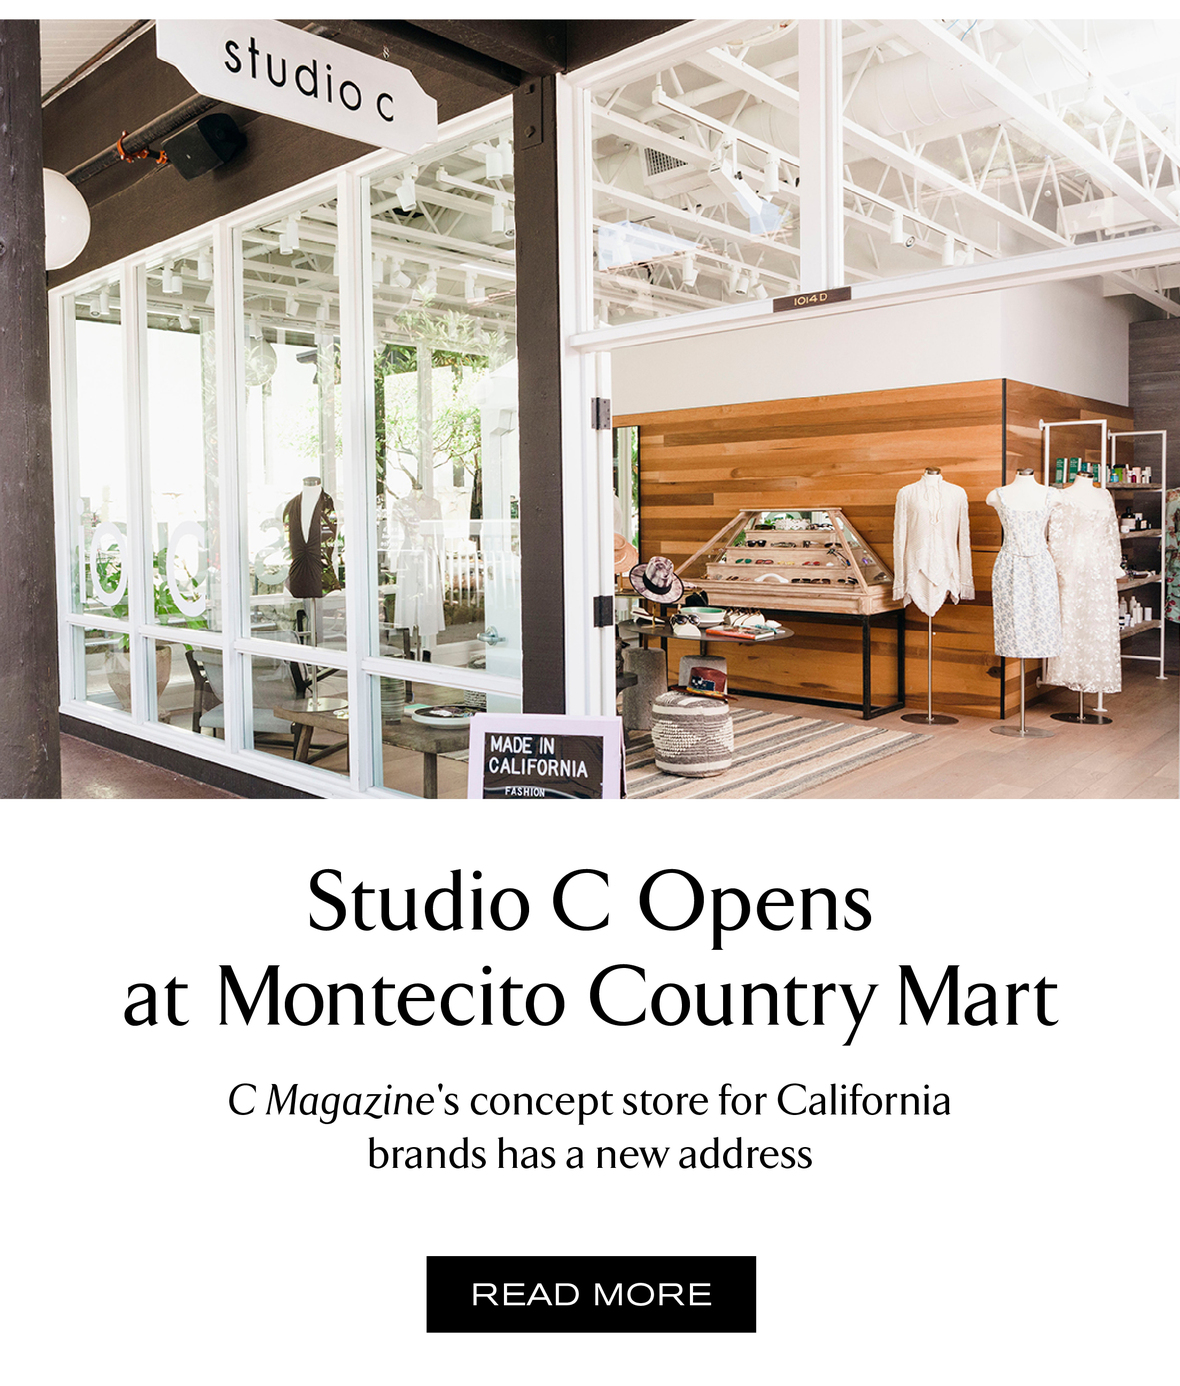 Studio C Opens at Montecito Country Mart